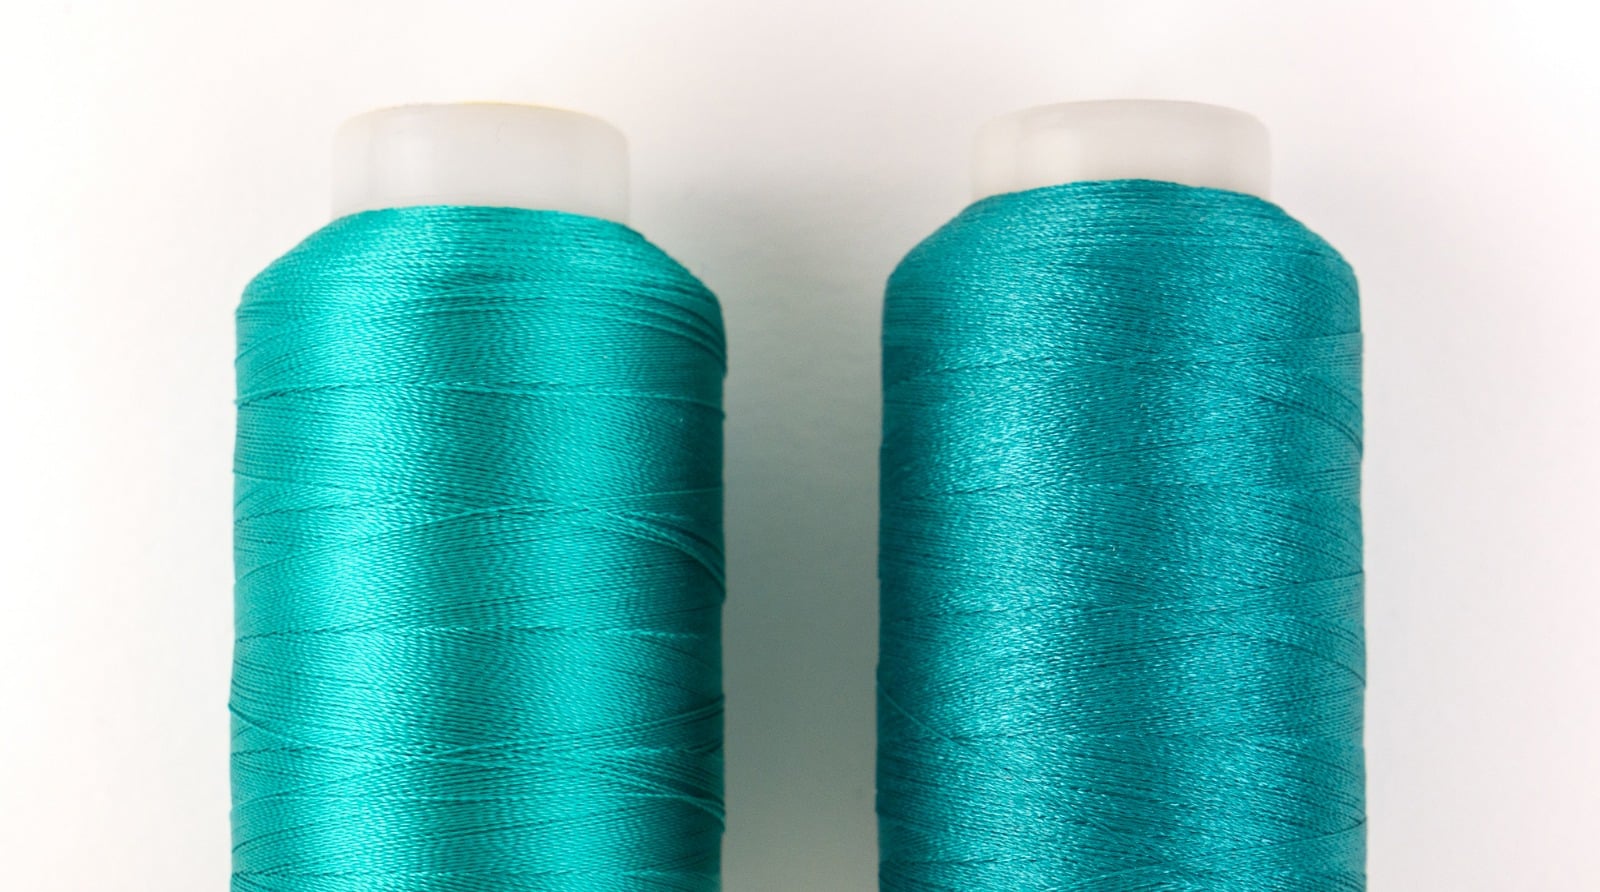 Splendor rayon vs Polyfast polyester threads.